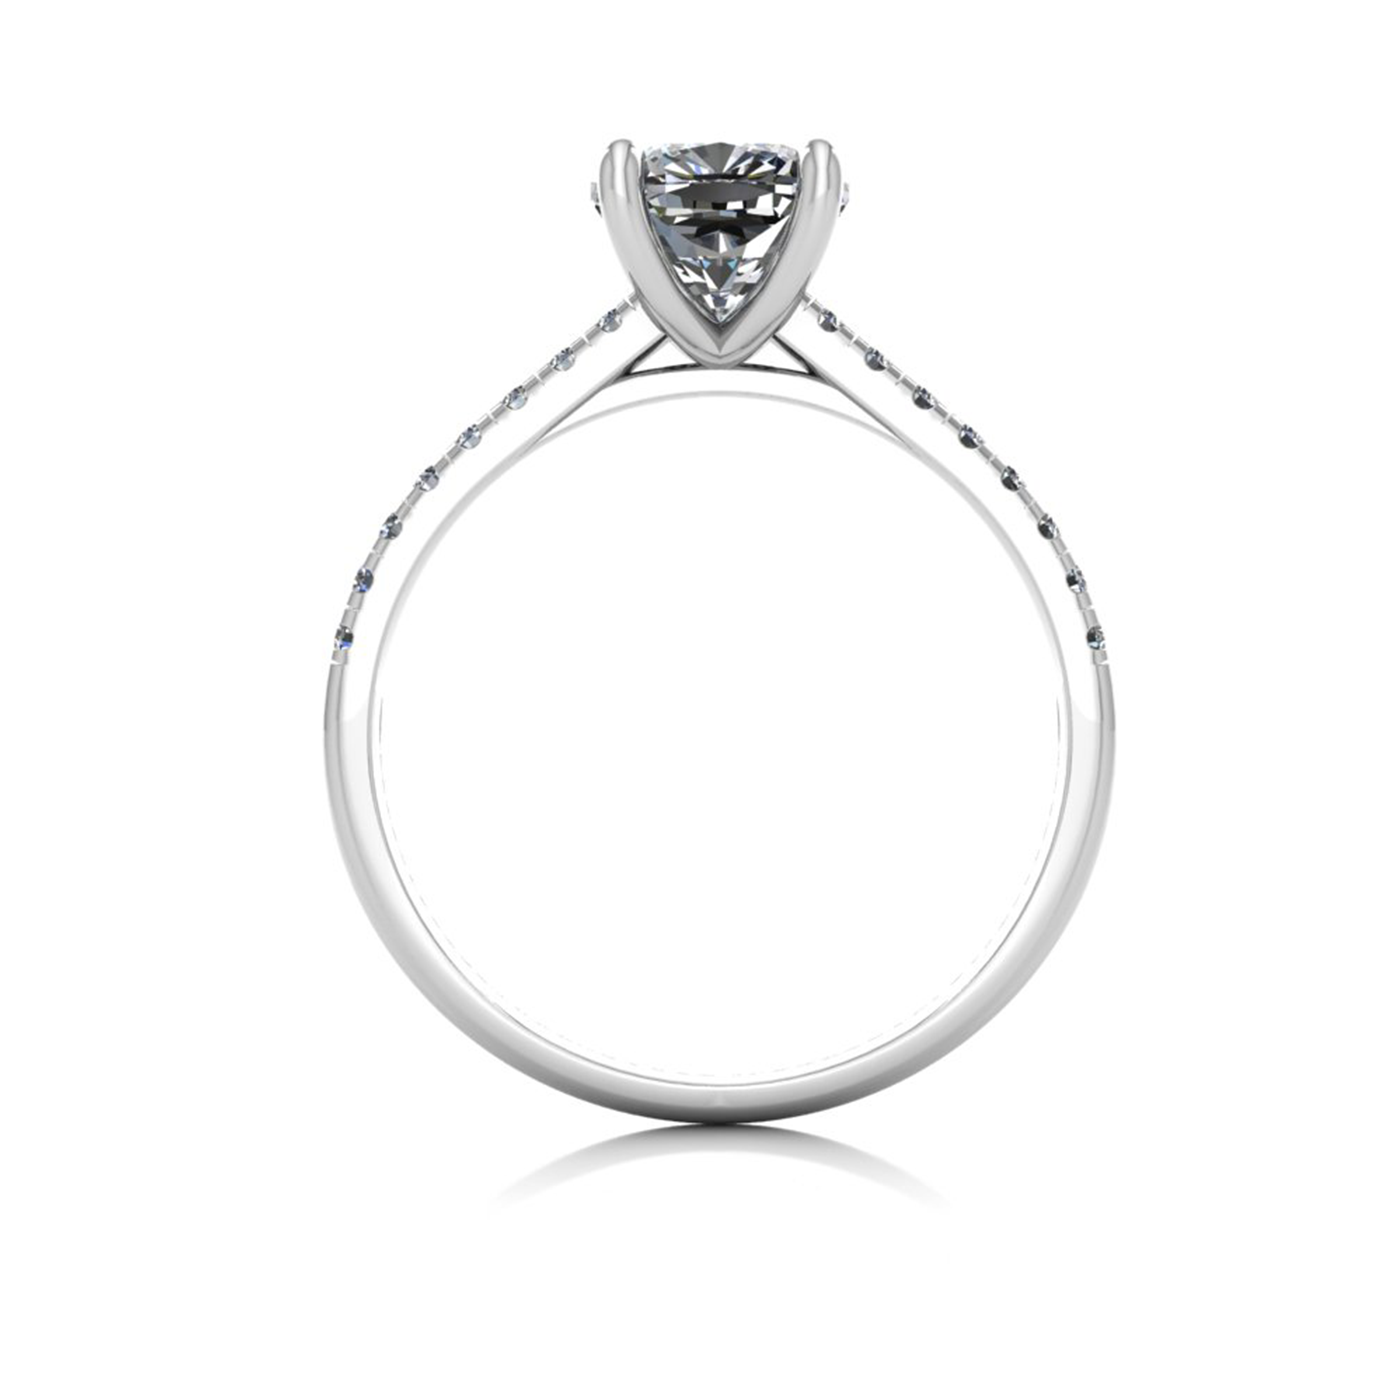 18k white gold 1.5ct 4 prongs cushion cut diamond engagement ring with whisper thin pavÉ set band